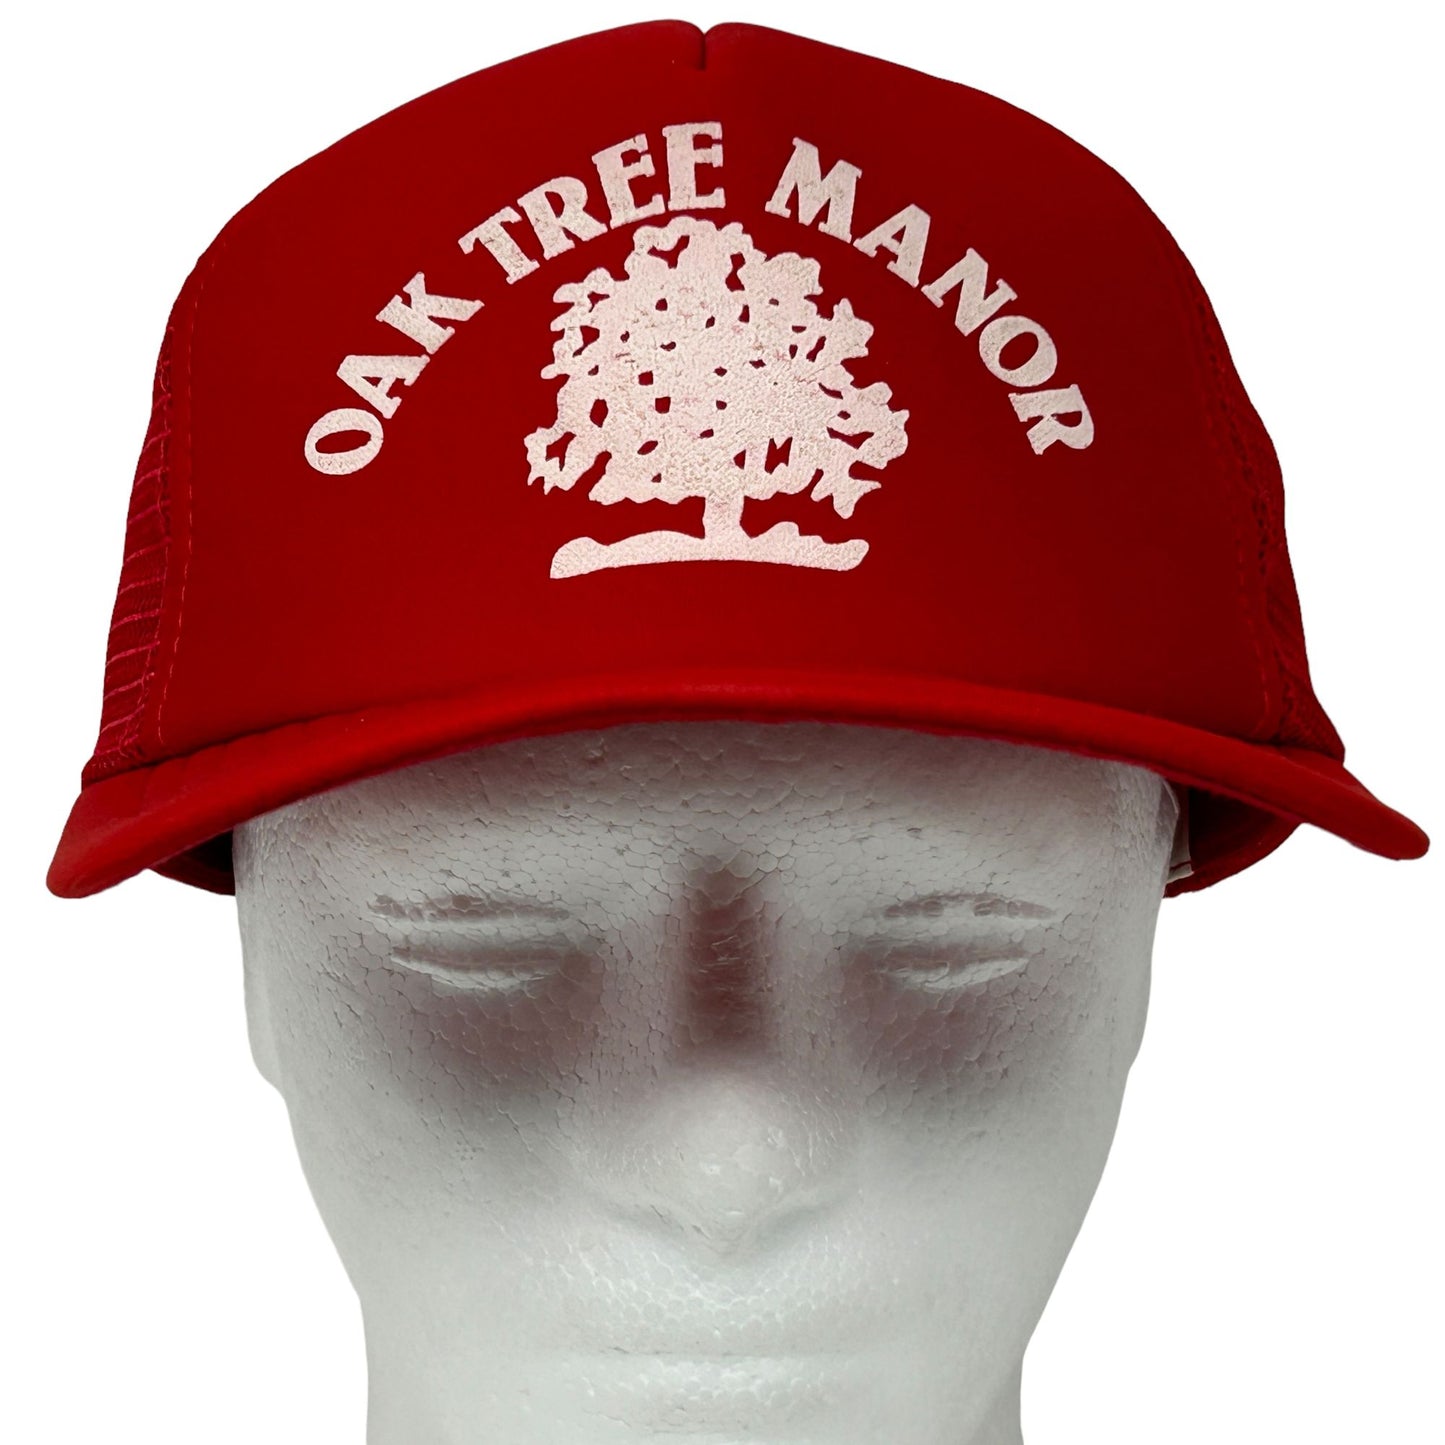 Oak Tree Manor 后扣卡车司机帽复古 80 年代春季德克萨斯州网状棒球帽